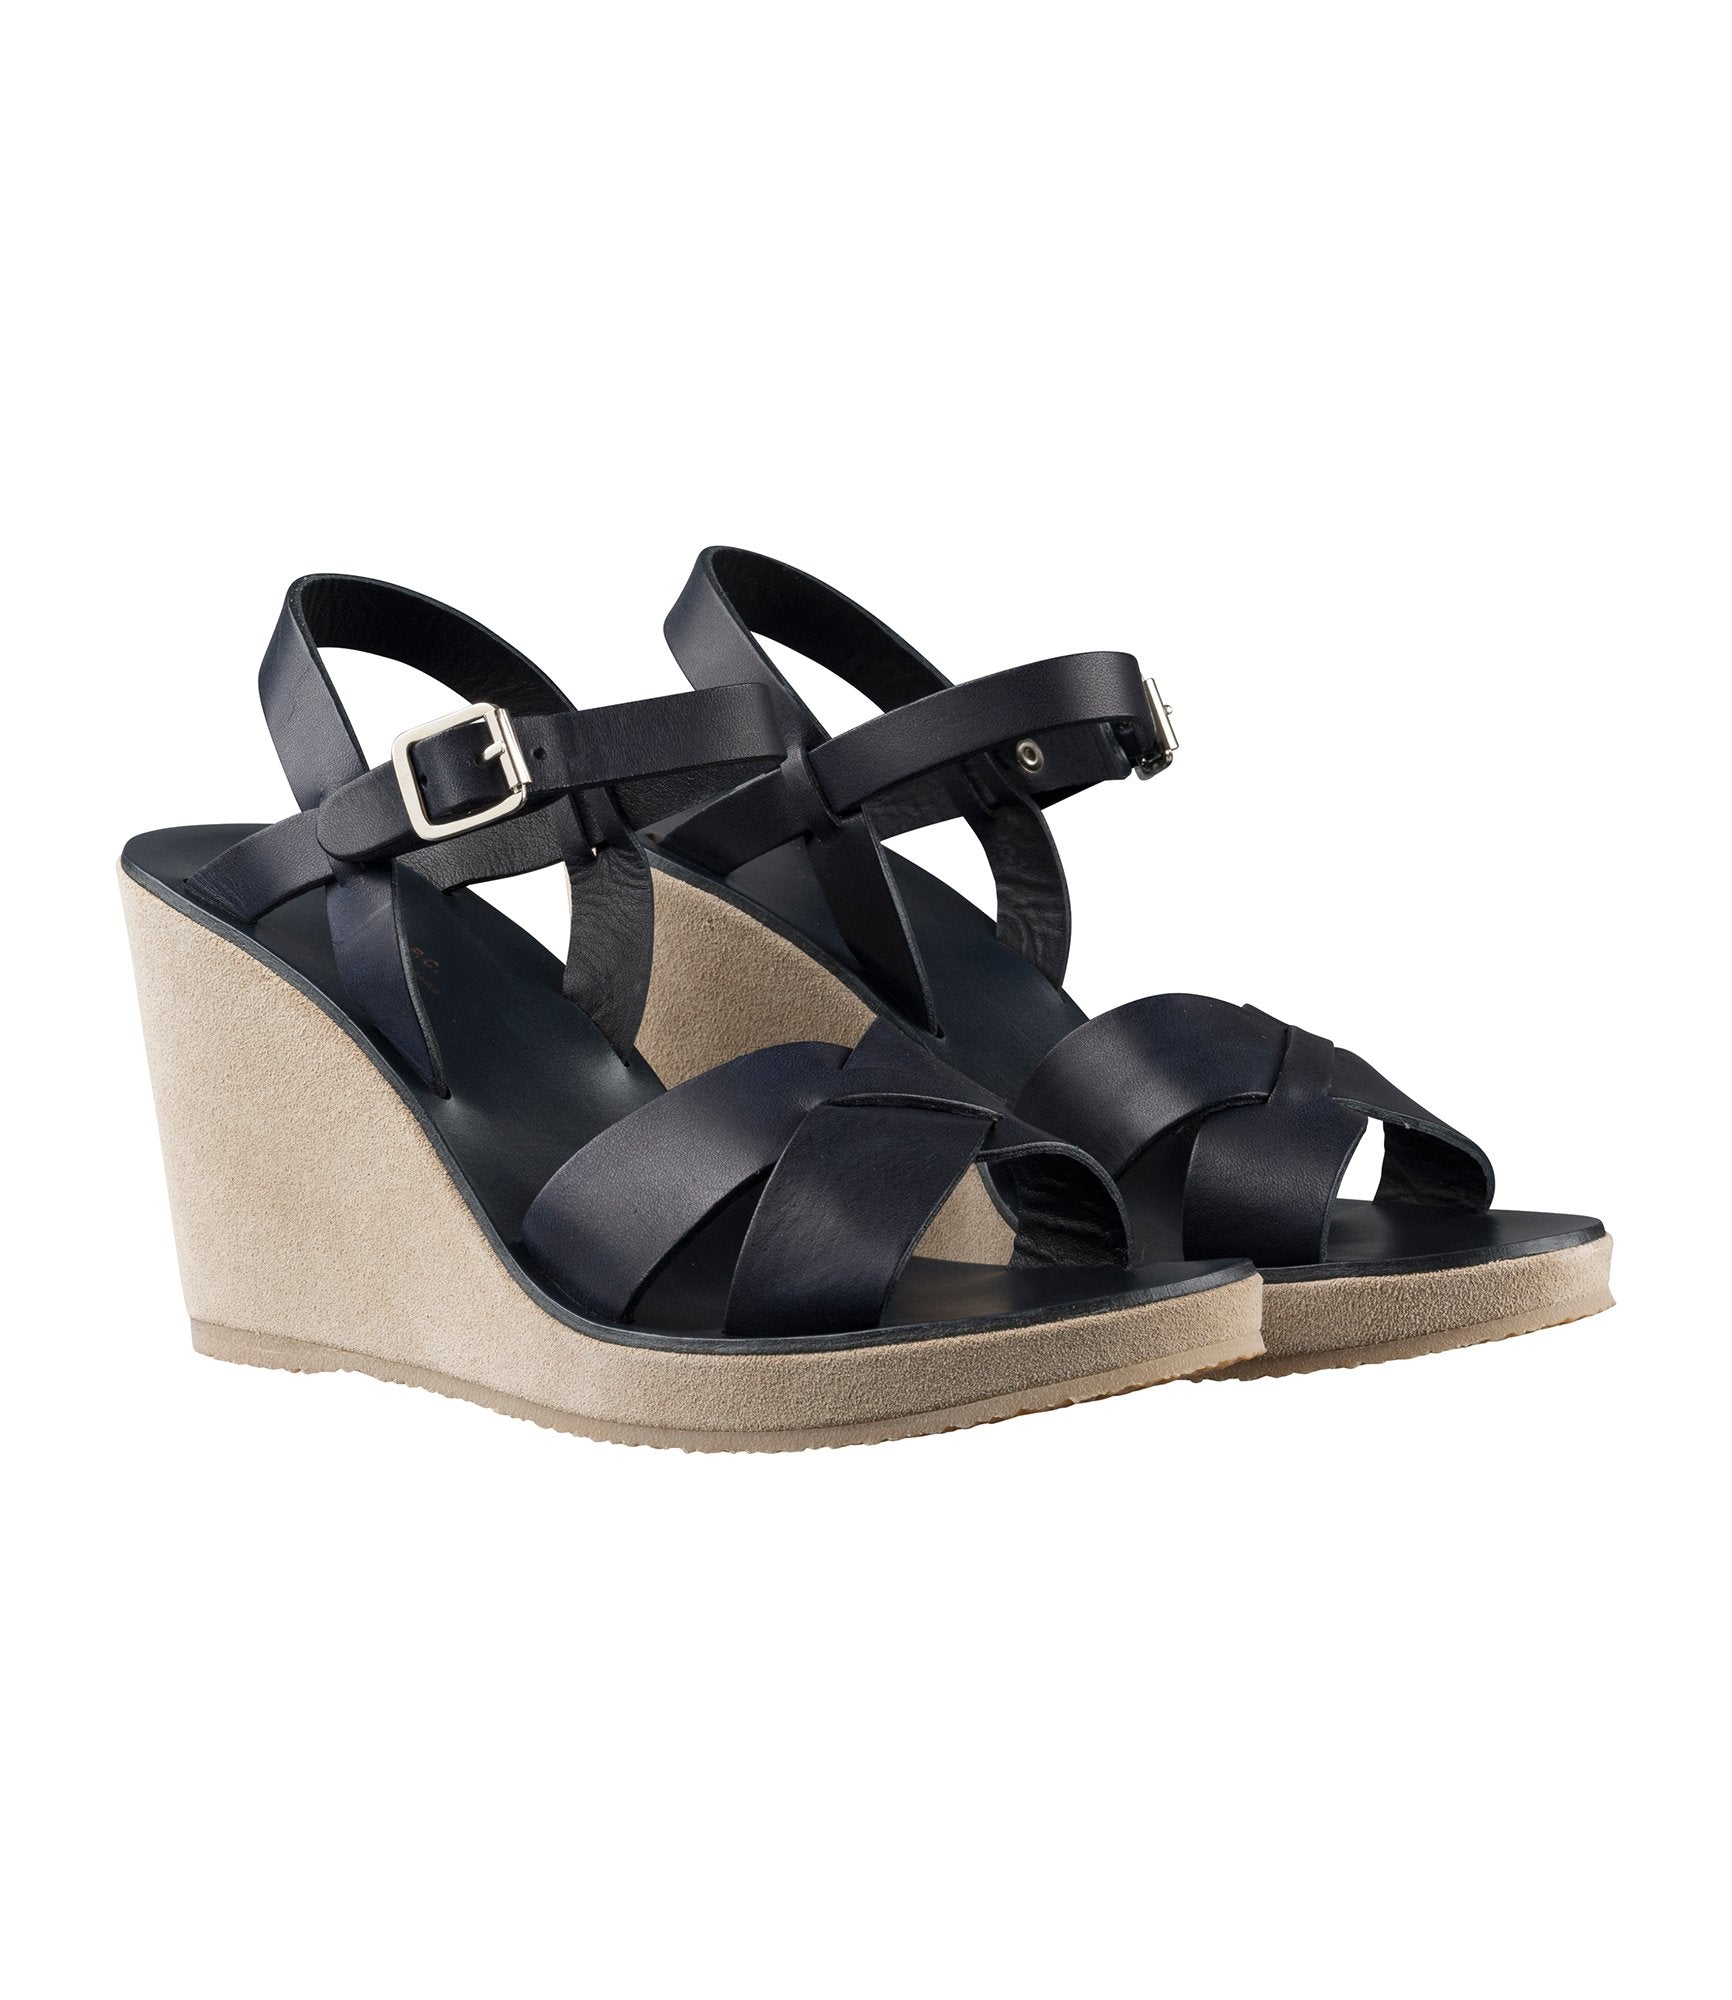 Juliette sandals - Italian Leather - Summer shoes - A.P.C. Accessories